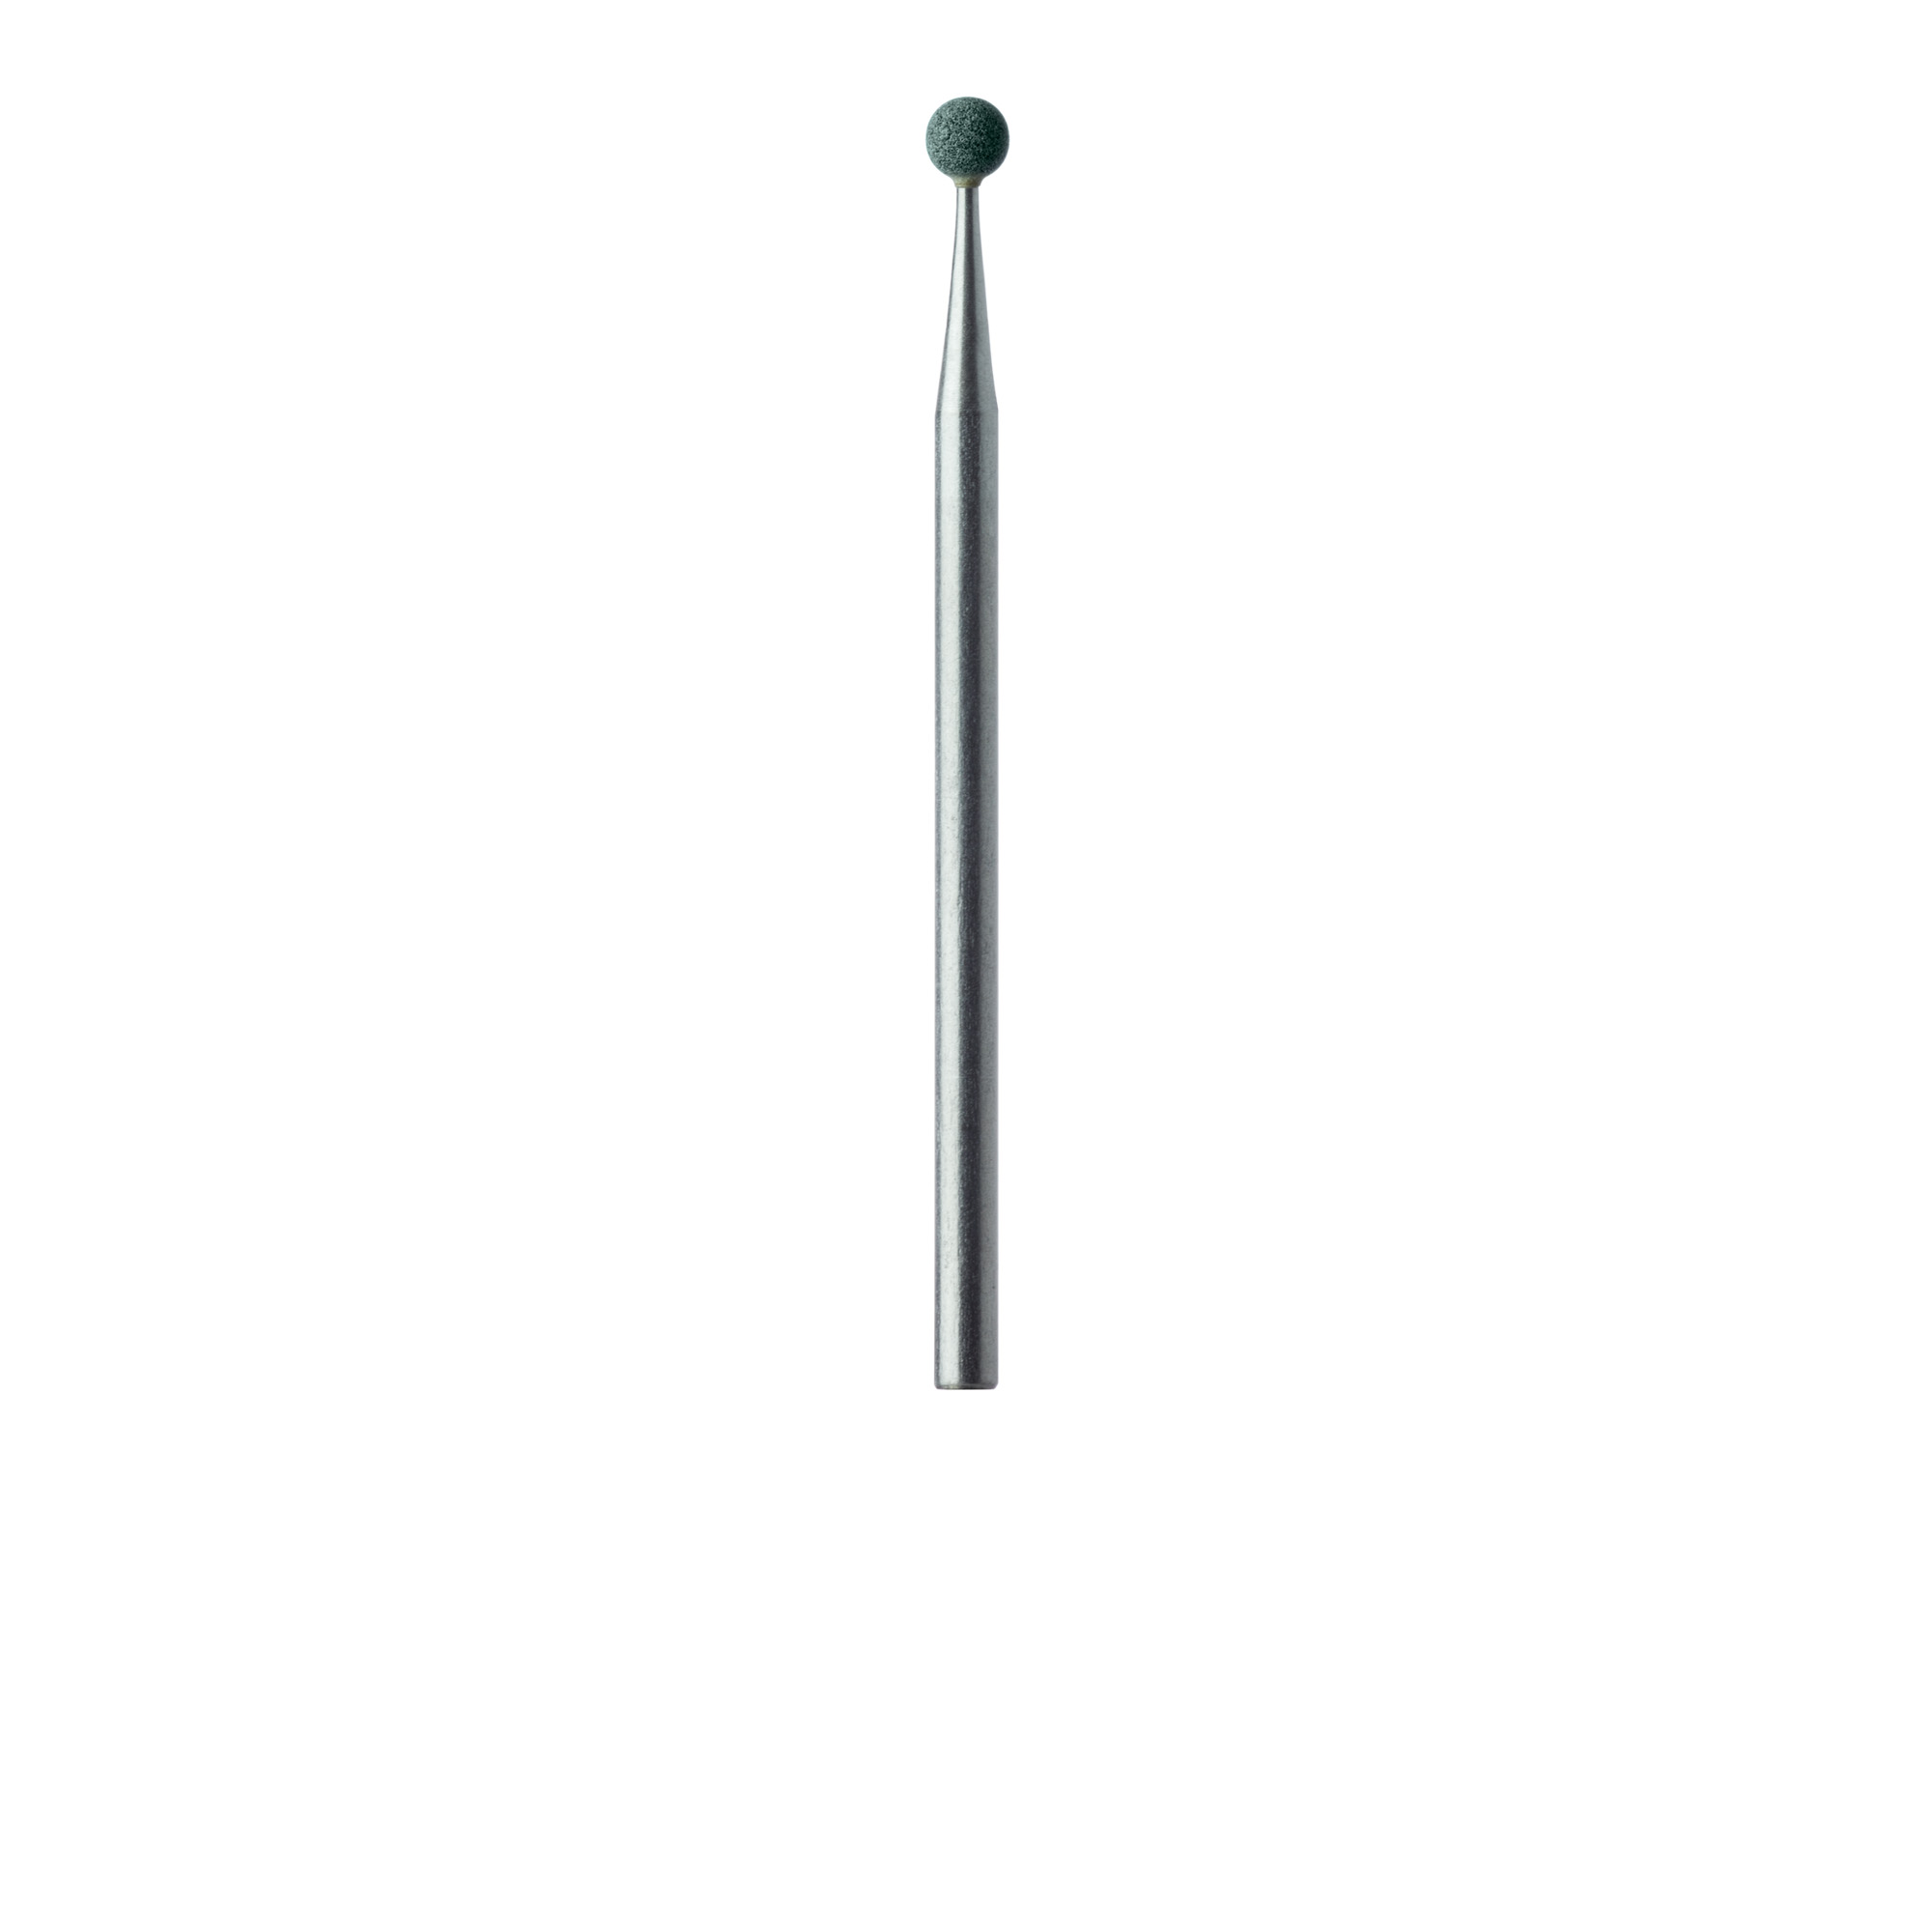 601-030-HP-GRN Abrasive, Green, Medium, 3.0 mm Round HP